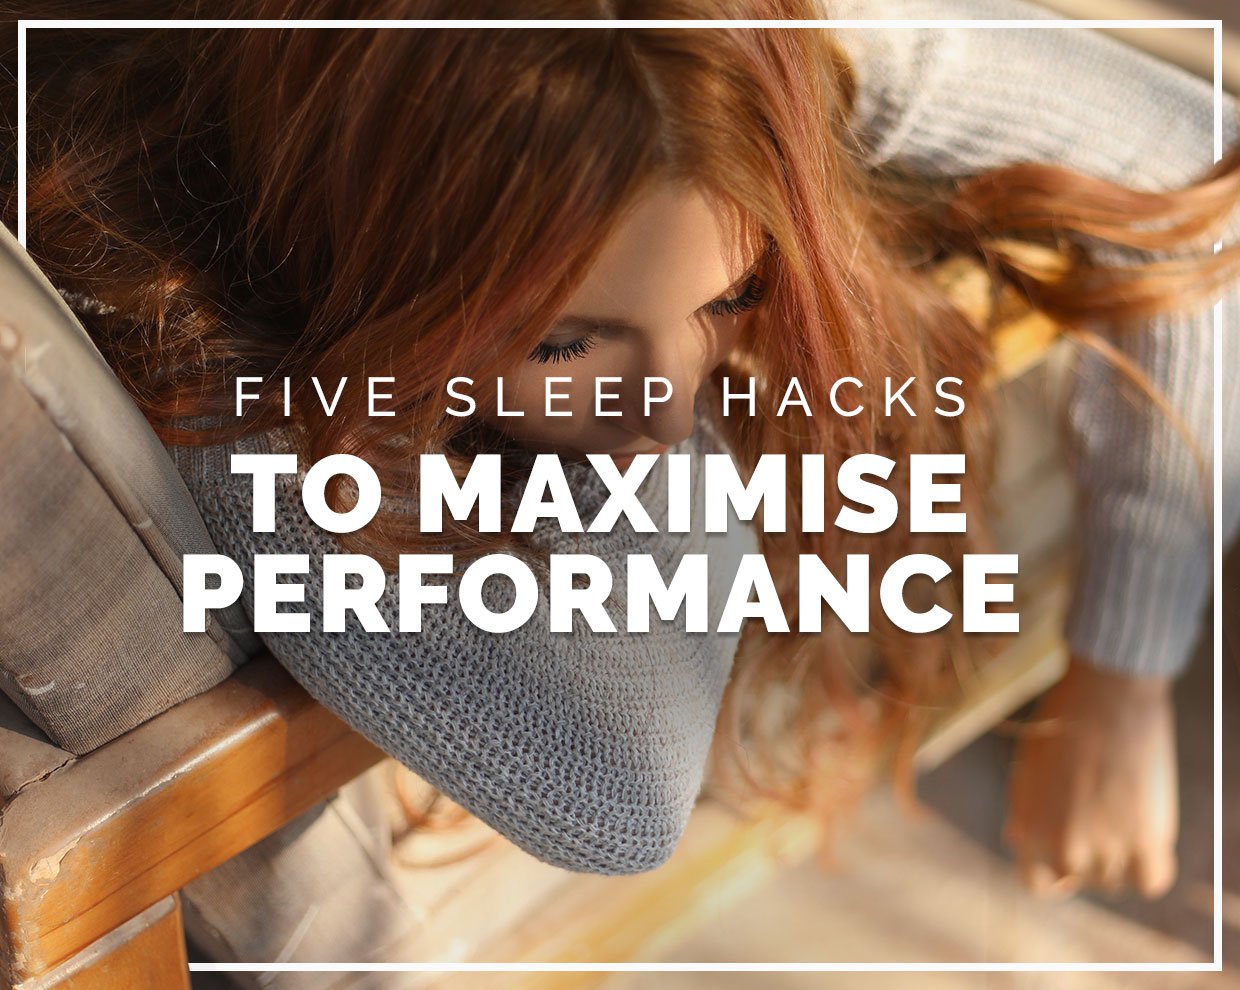 Five sleep hacks to maximise performance